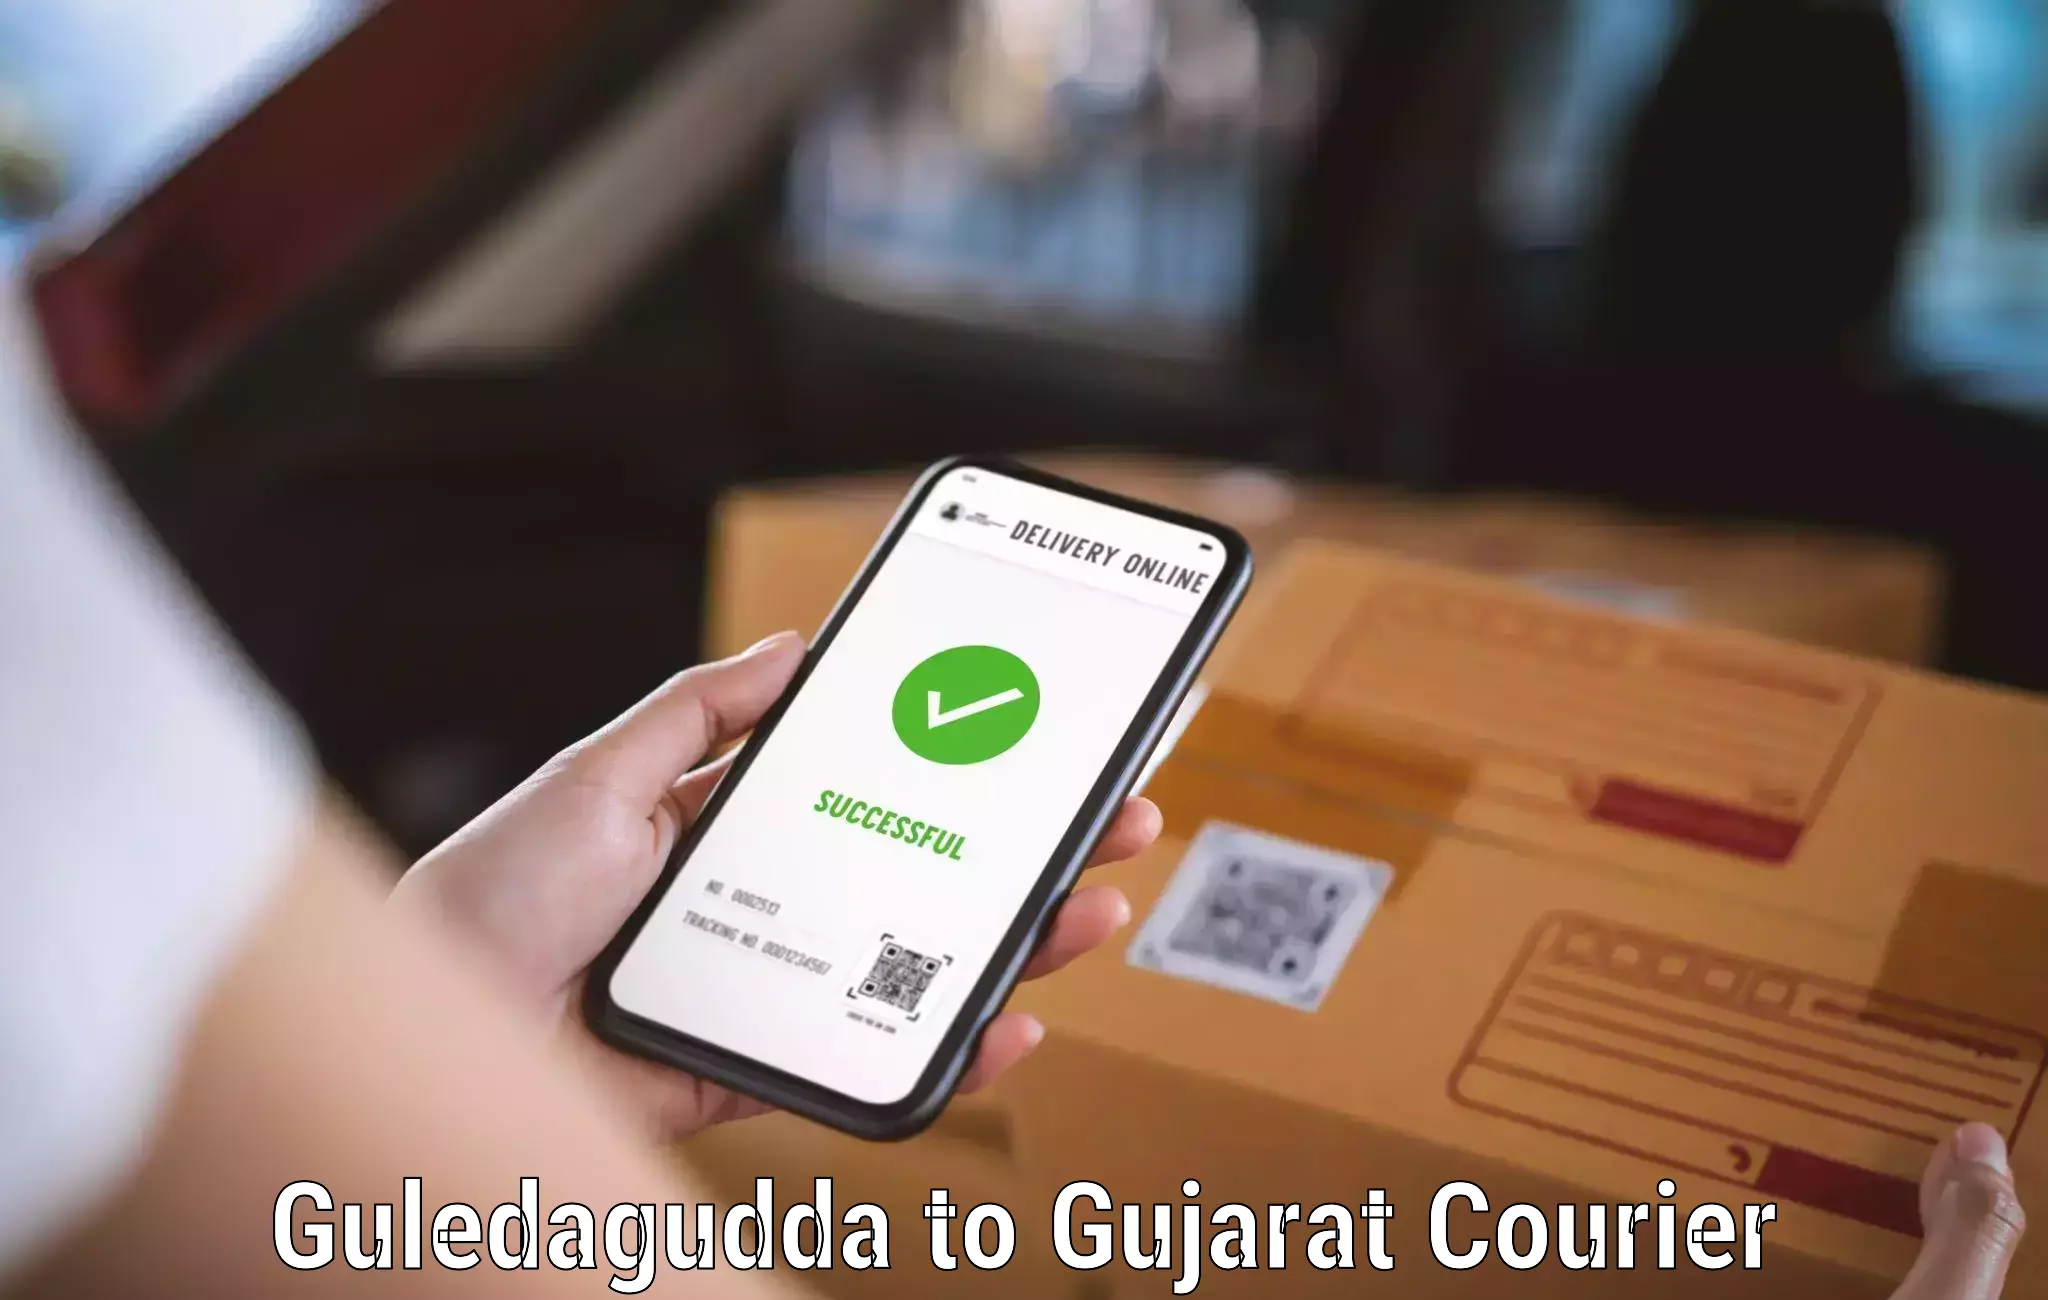 State-of-the-art courier technology Guledagudda to IIIT Surat